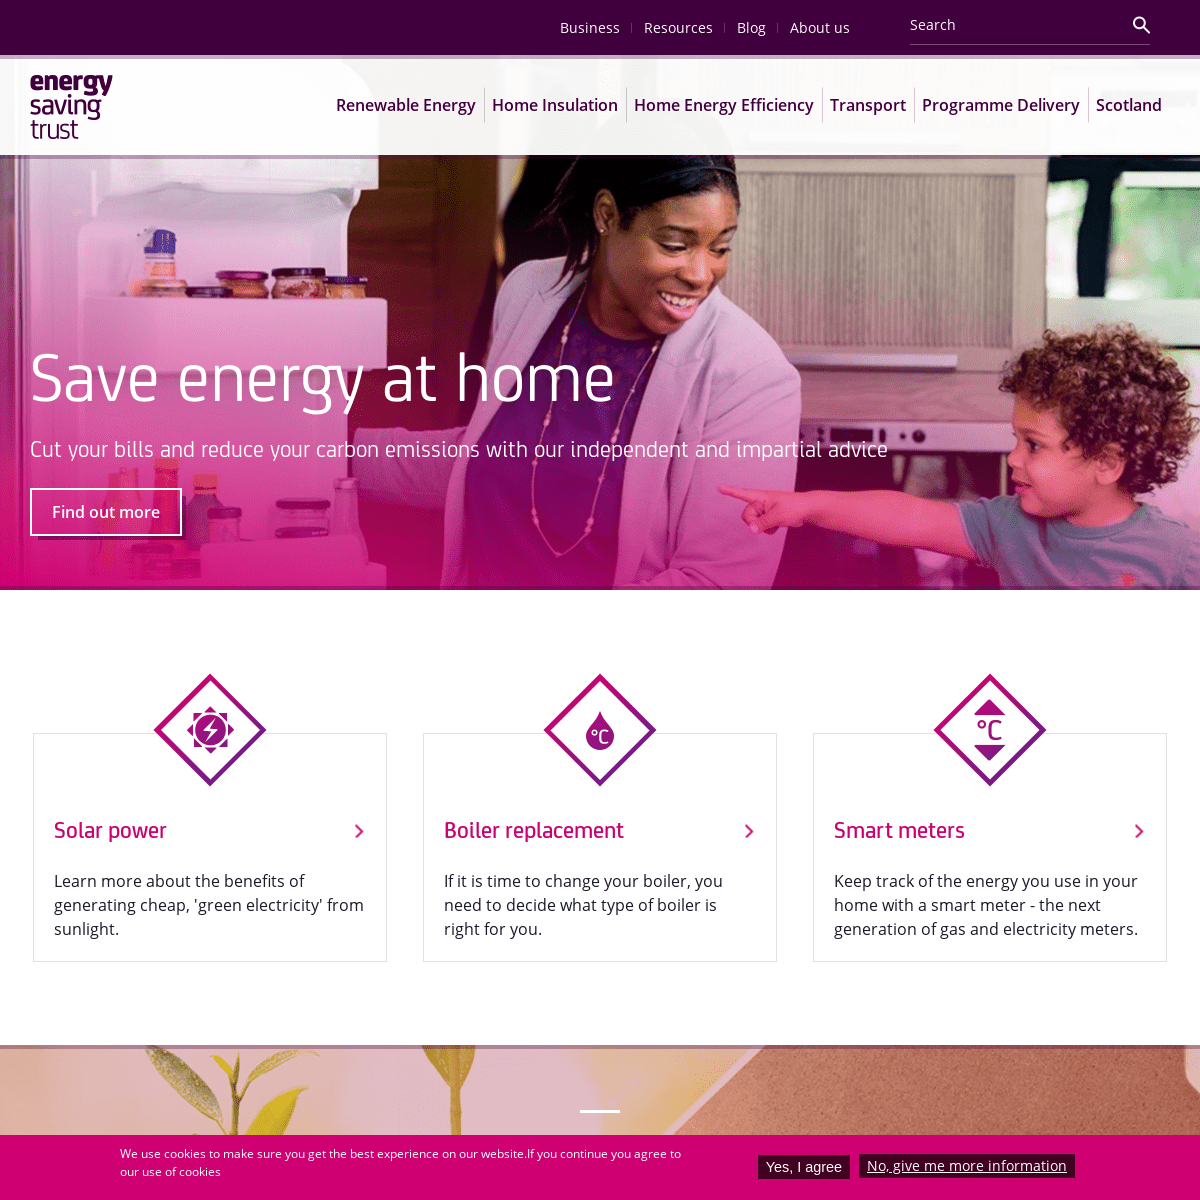 A complete backup of energysavingtrust.org.uk